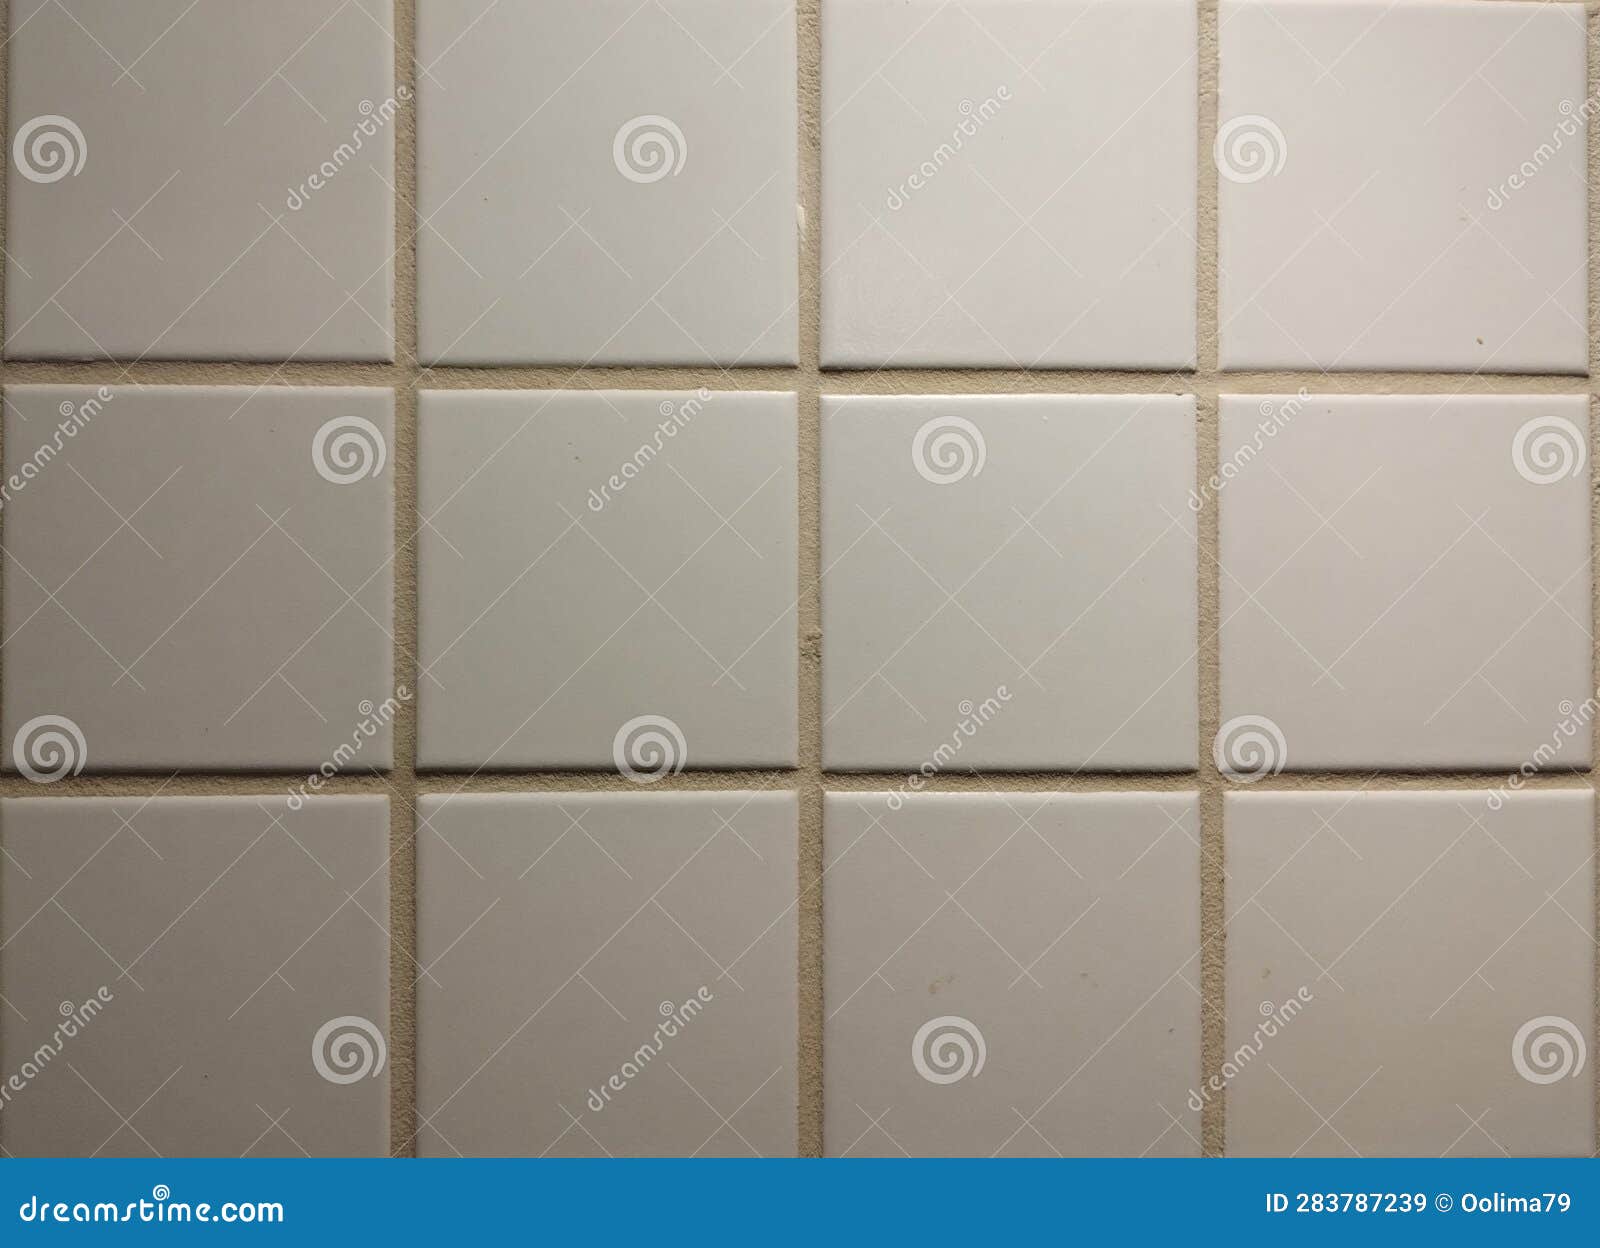 ceramic tile wall cladding